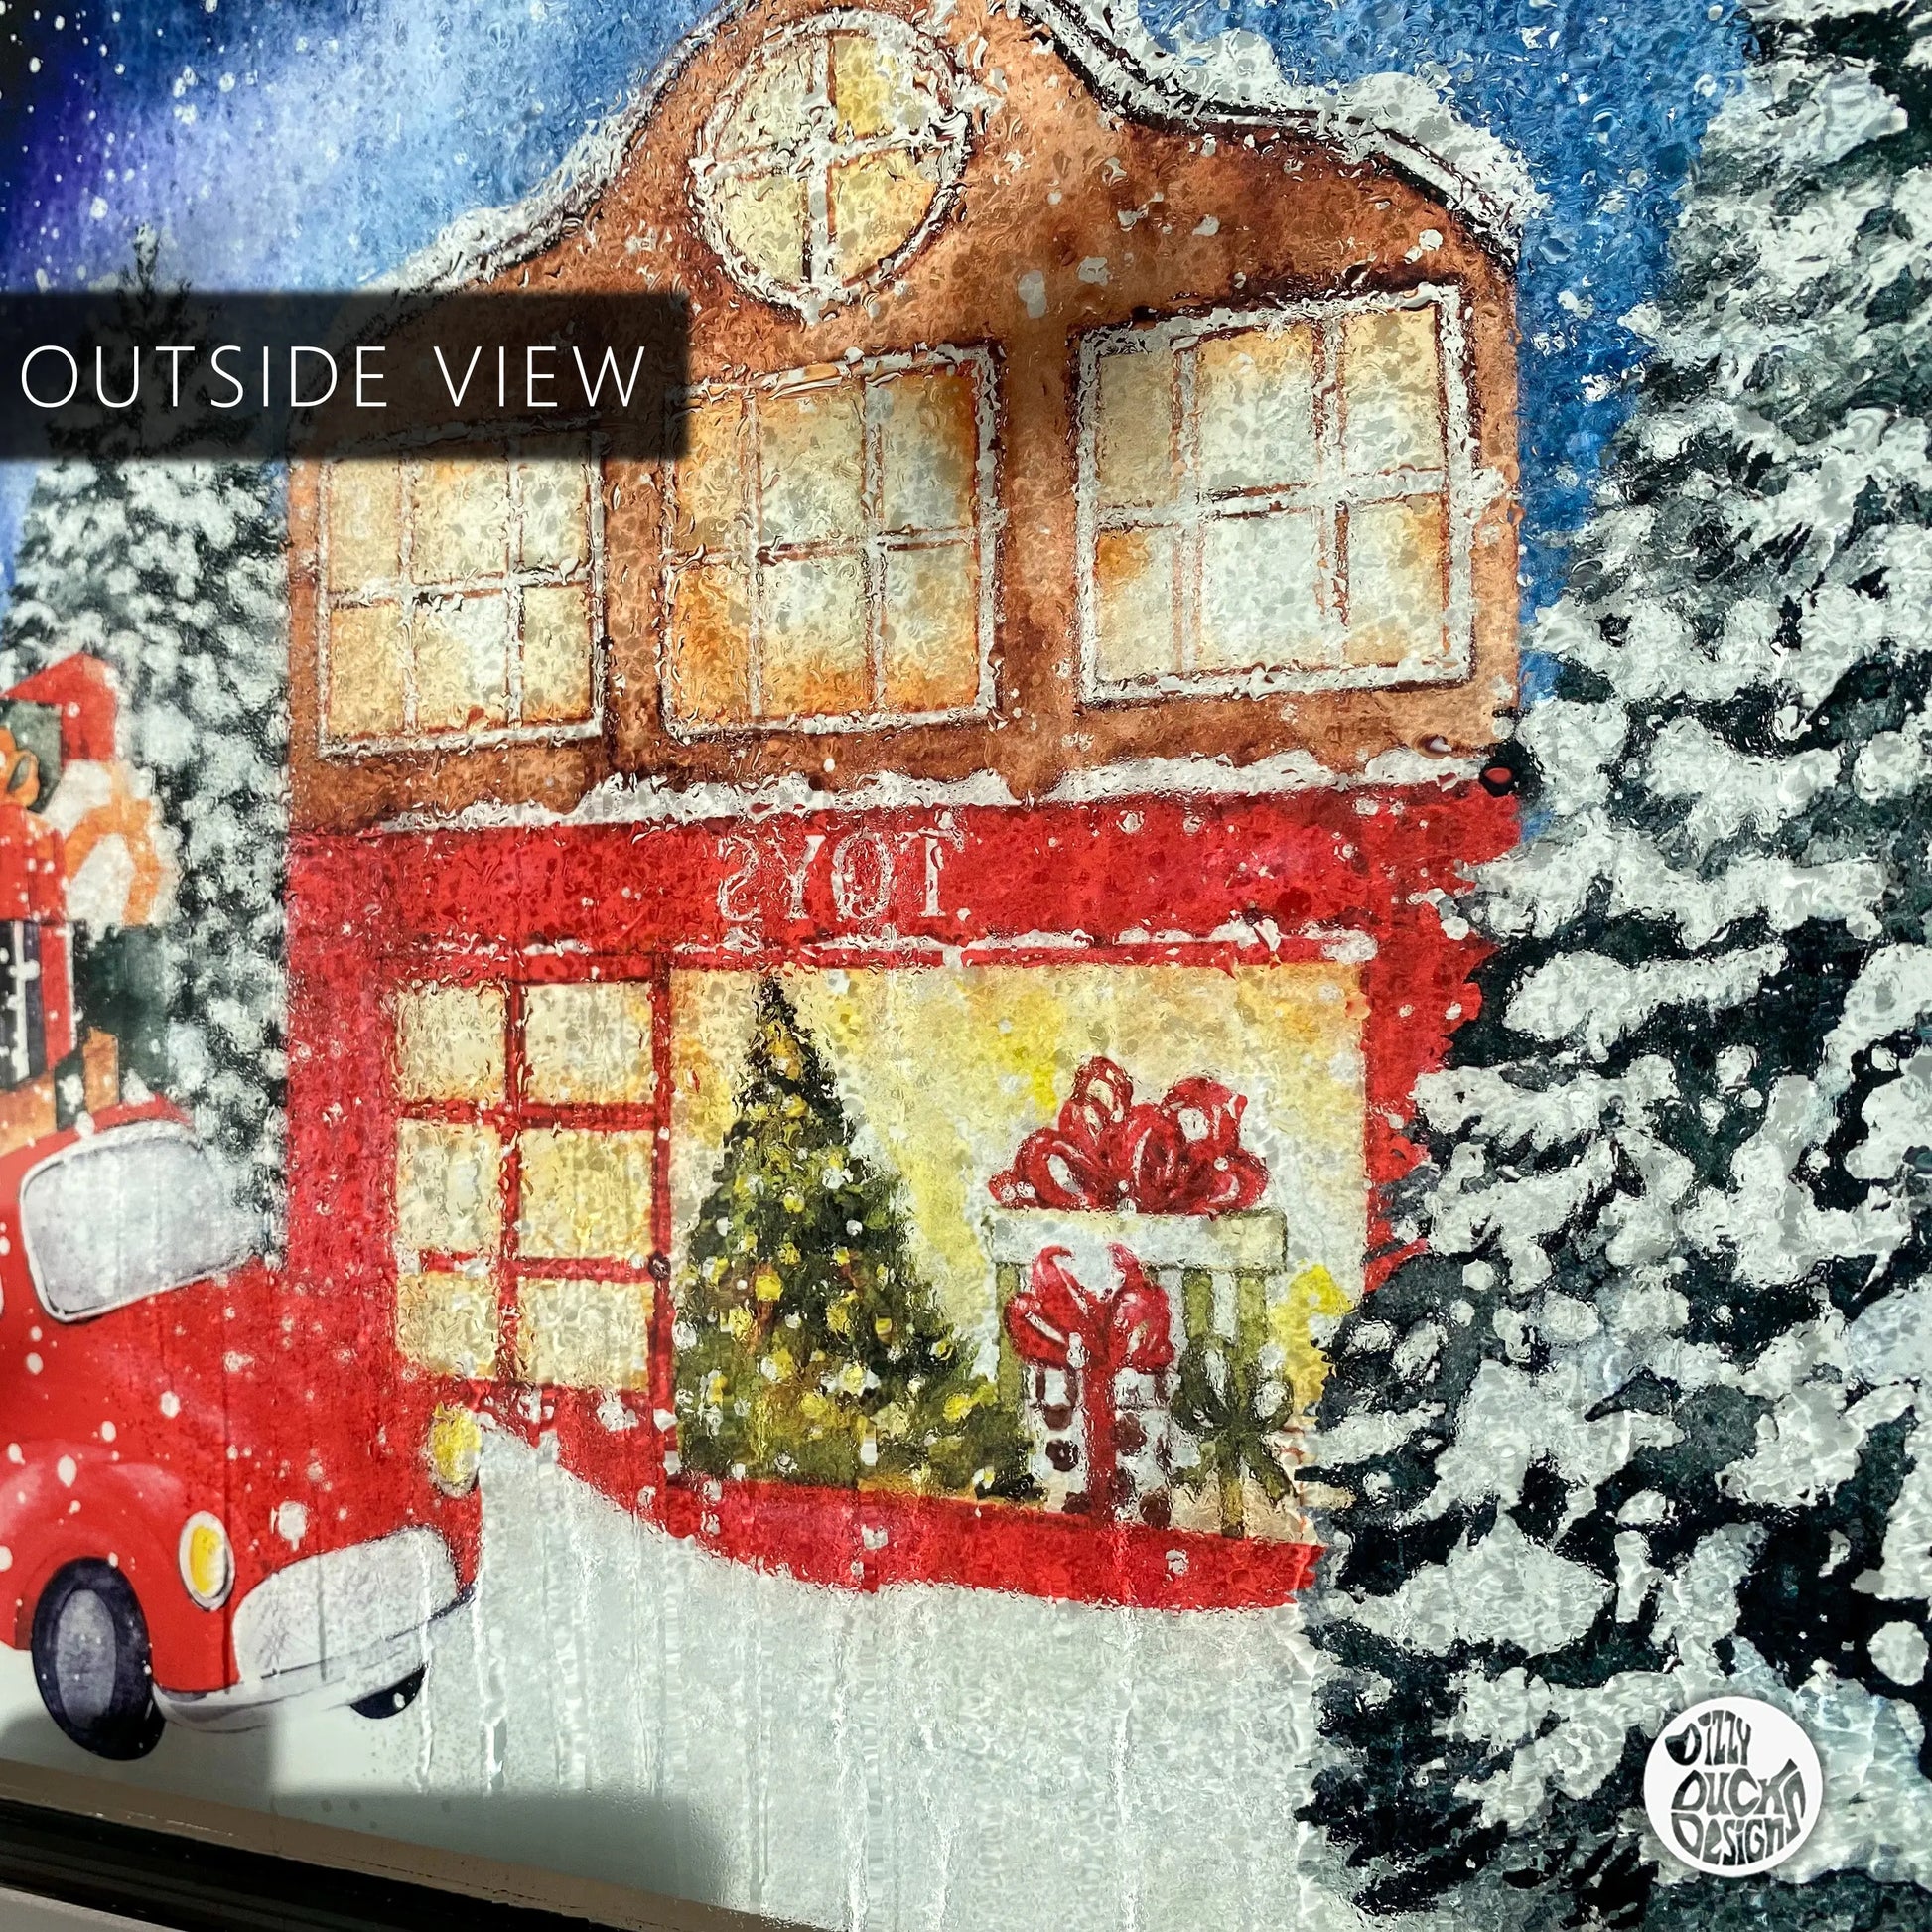 Decal Festive Town Winter Village Window Decal Dizzy Duck Designs